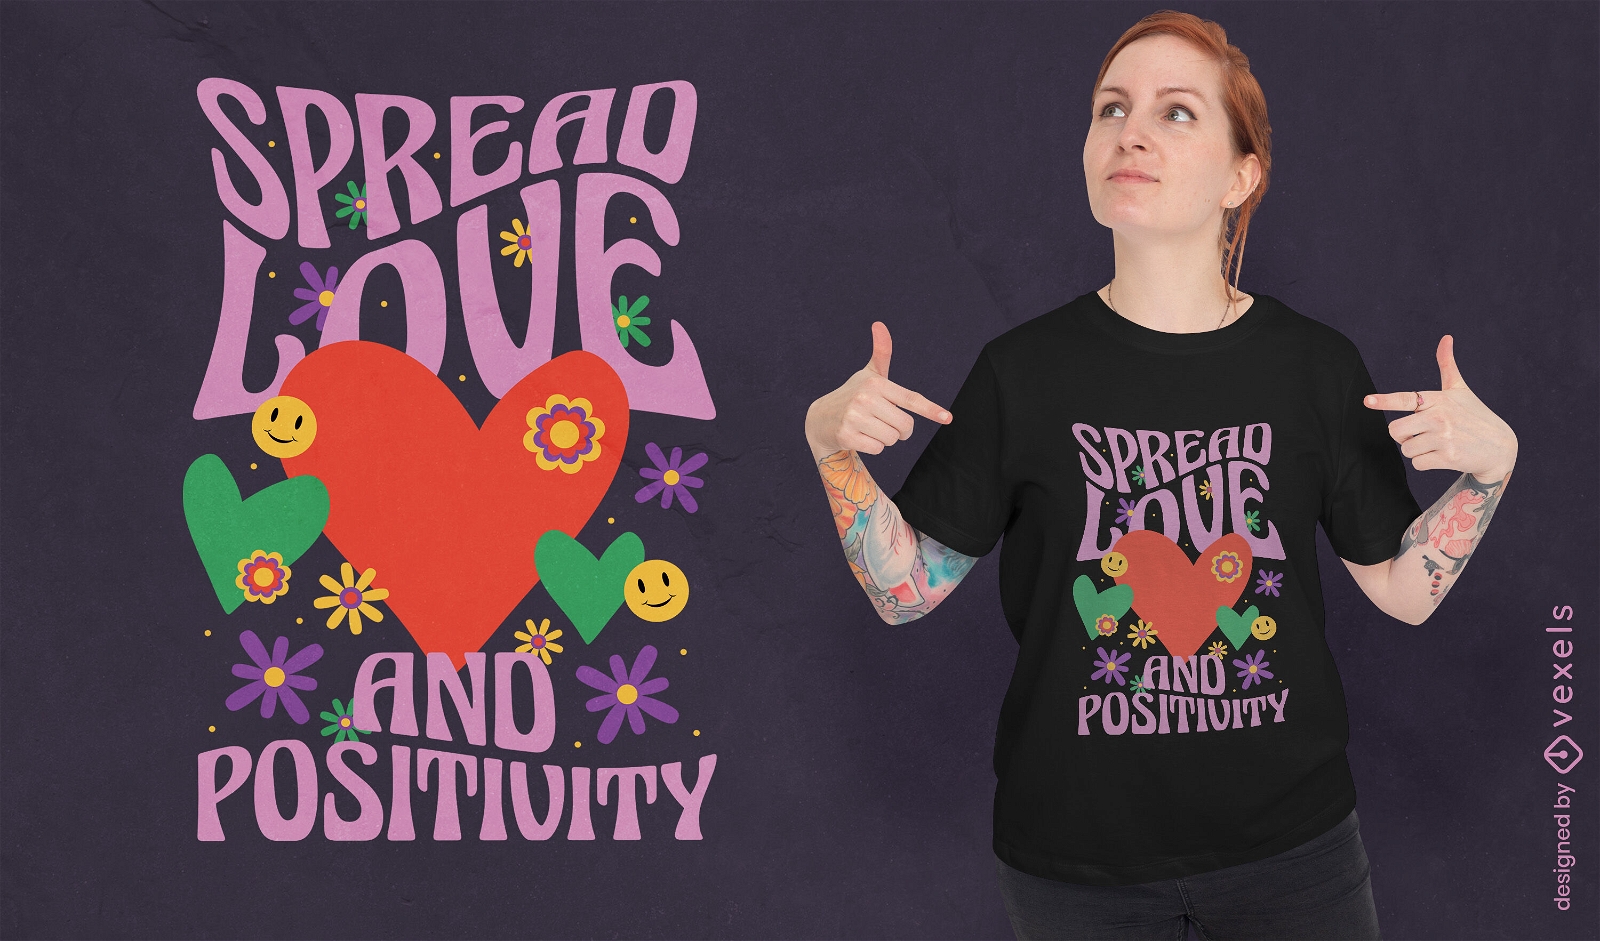 Love and positivity retro t-shirt design